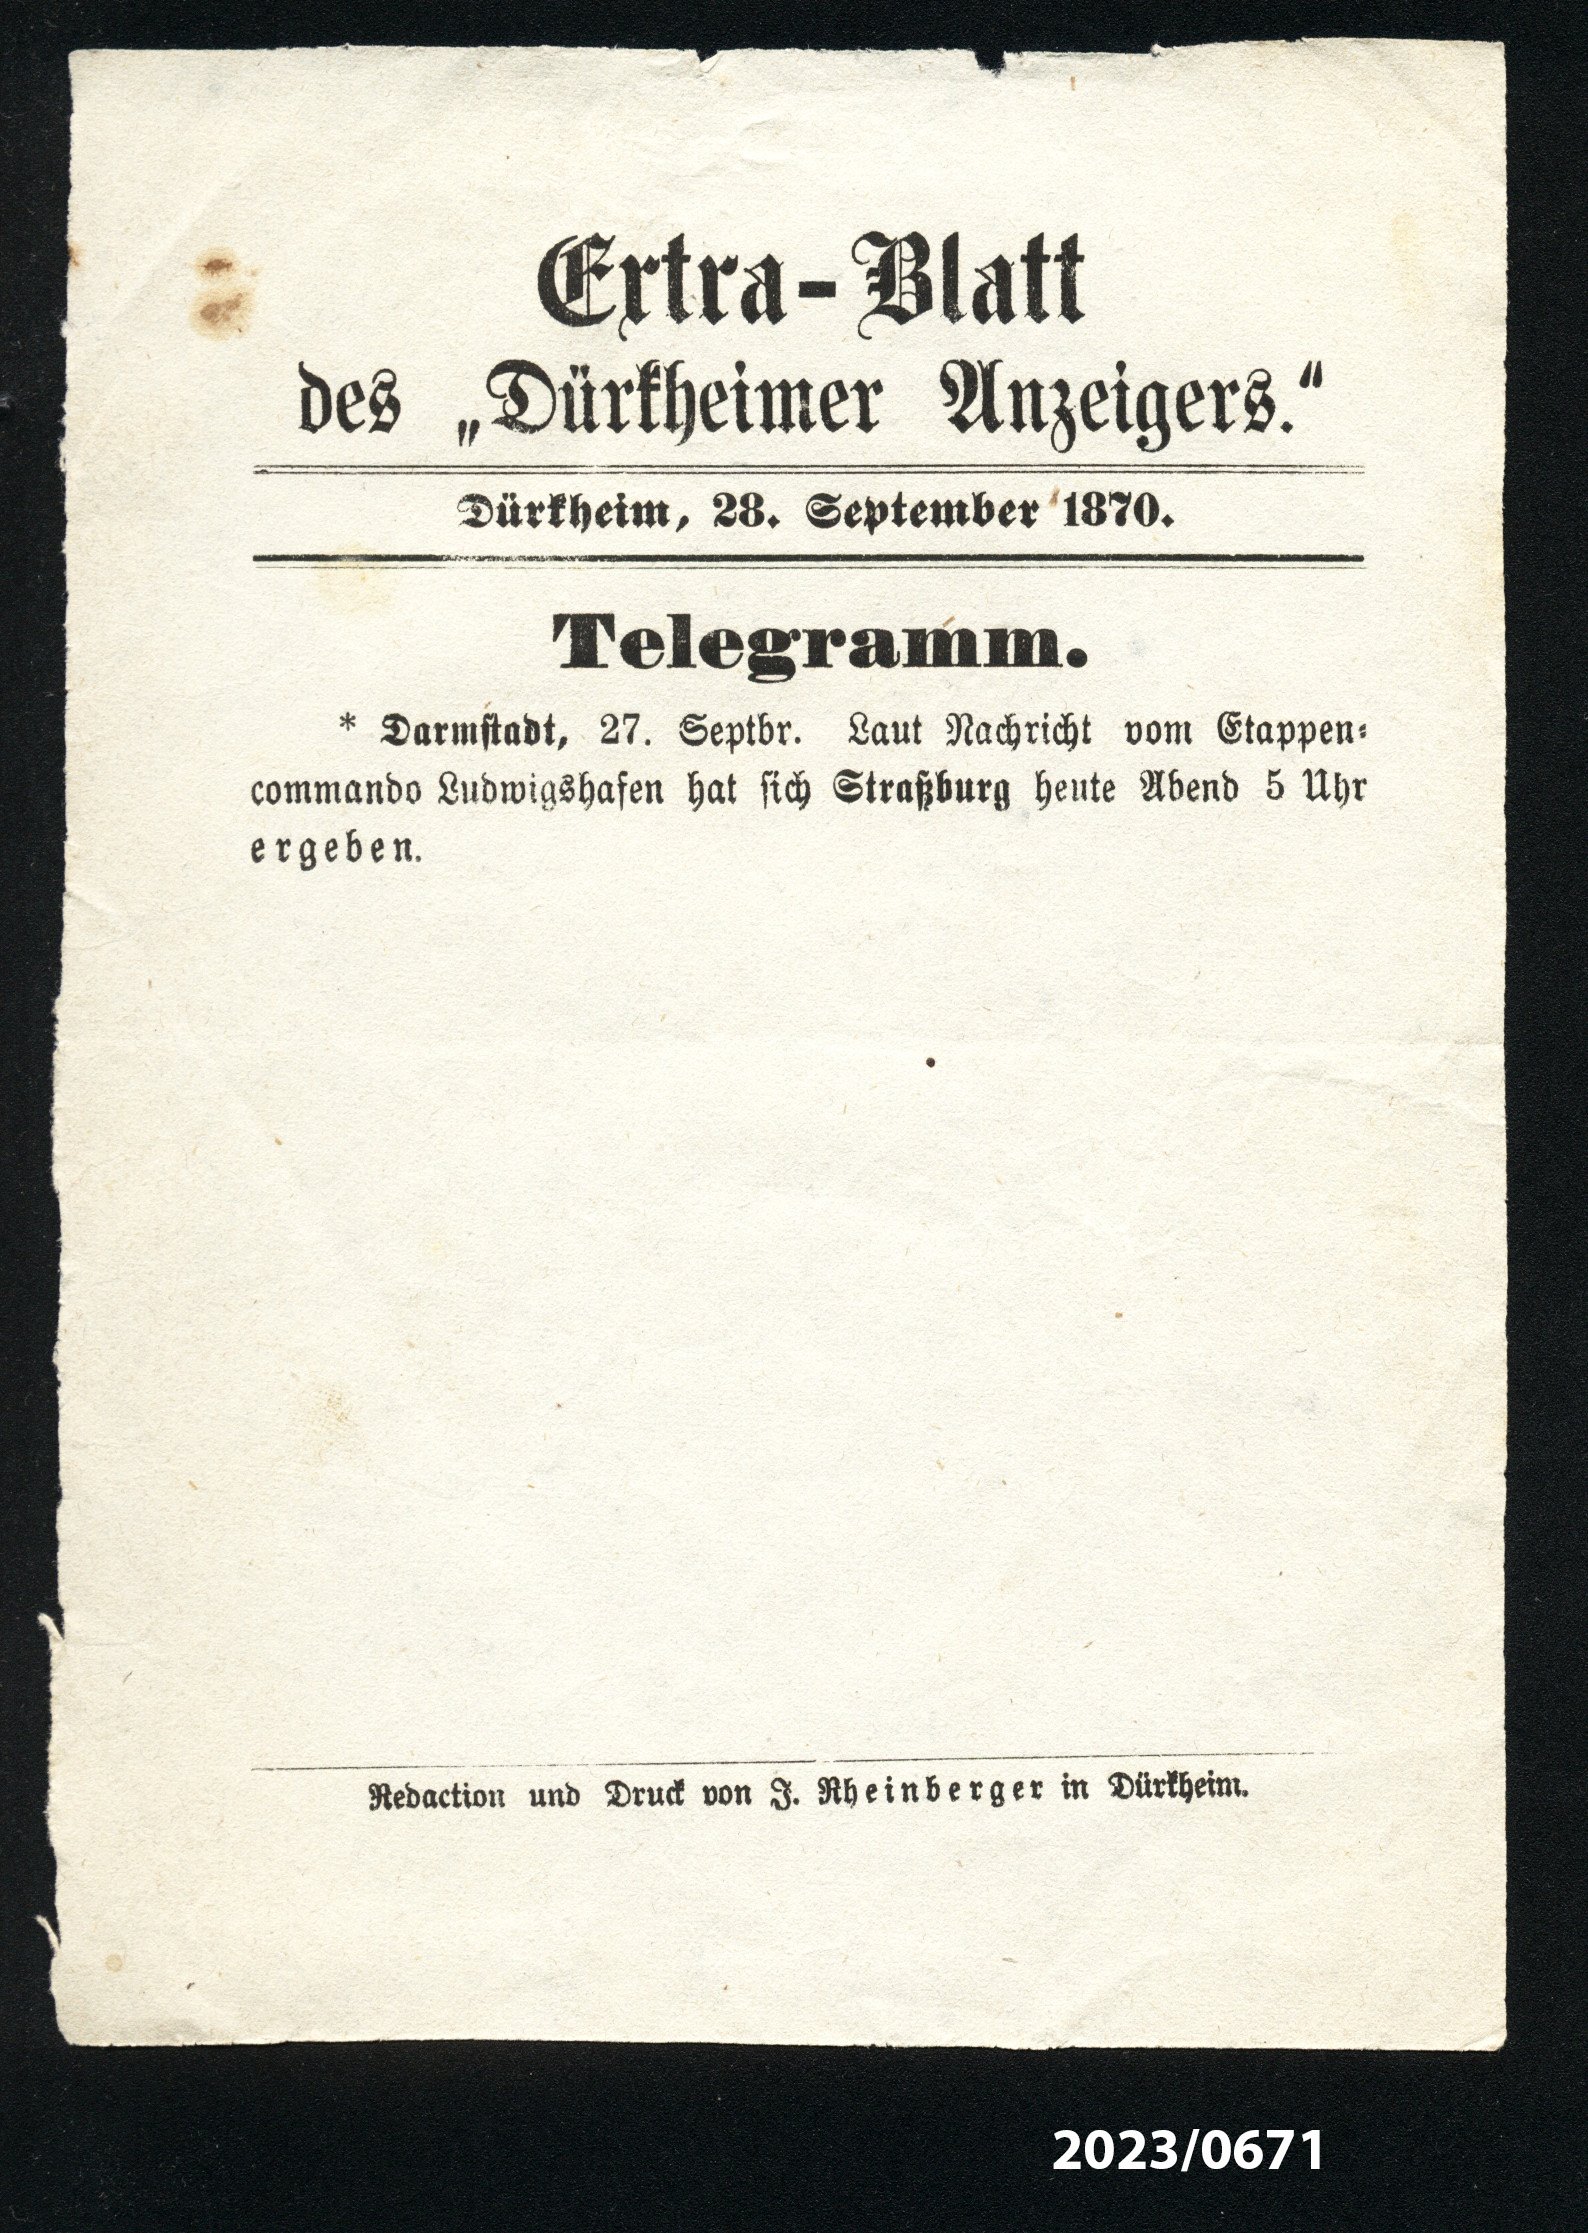 Extra-Blatt des "Dürkheimer Anzeigers." 28.9.1870 (Stadtmuseum Bad Dürkheim im Kulturzentrum Haus Catoir CC BY-NC-SA)